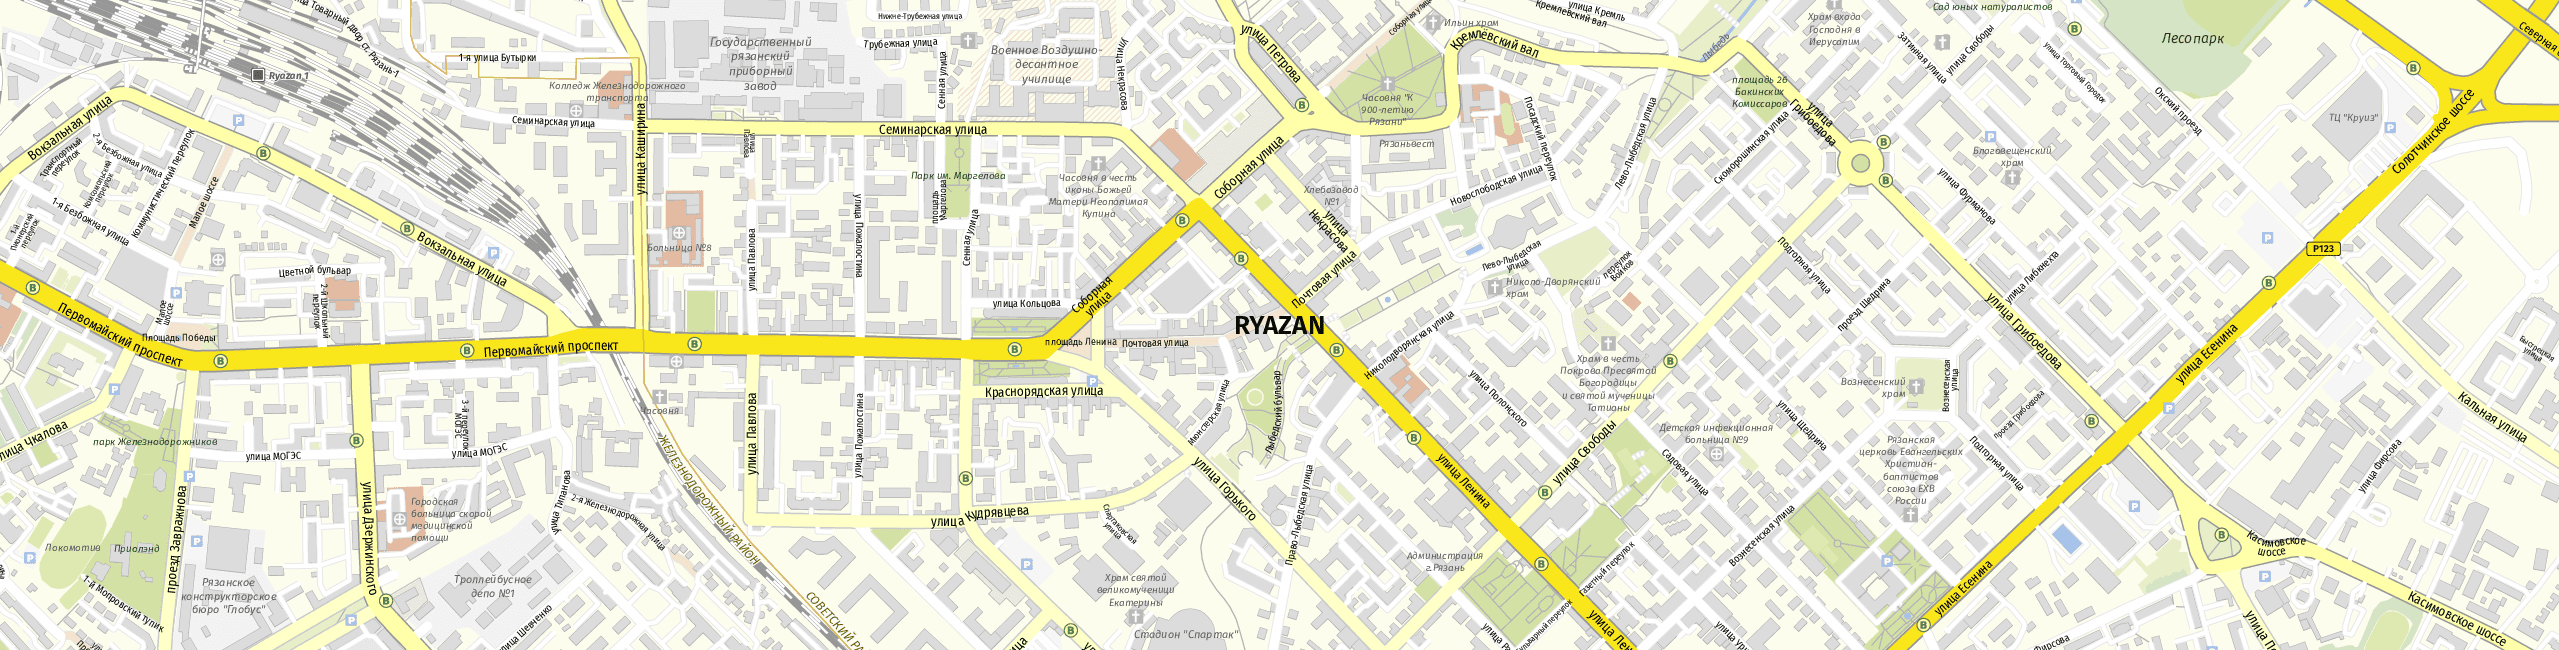 Stadtplan Rjasan zum Downloaden.